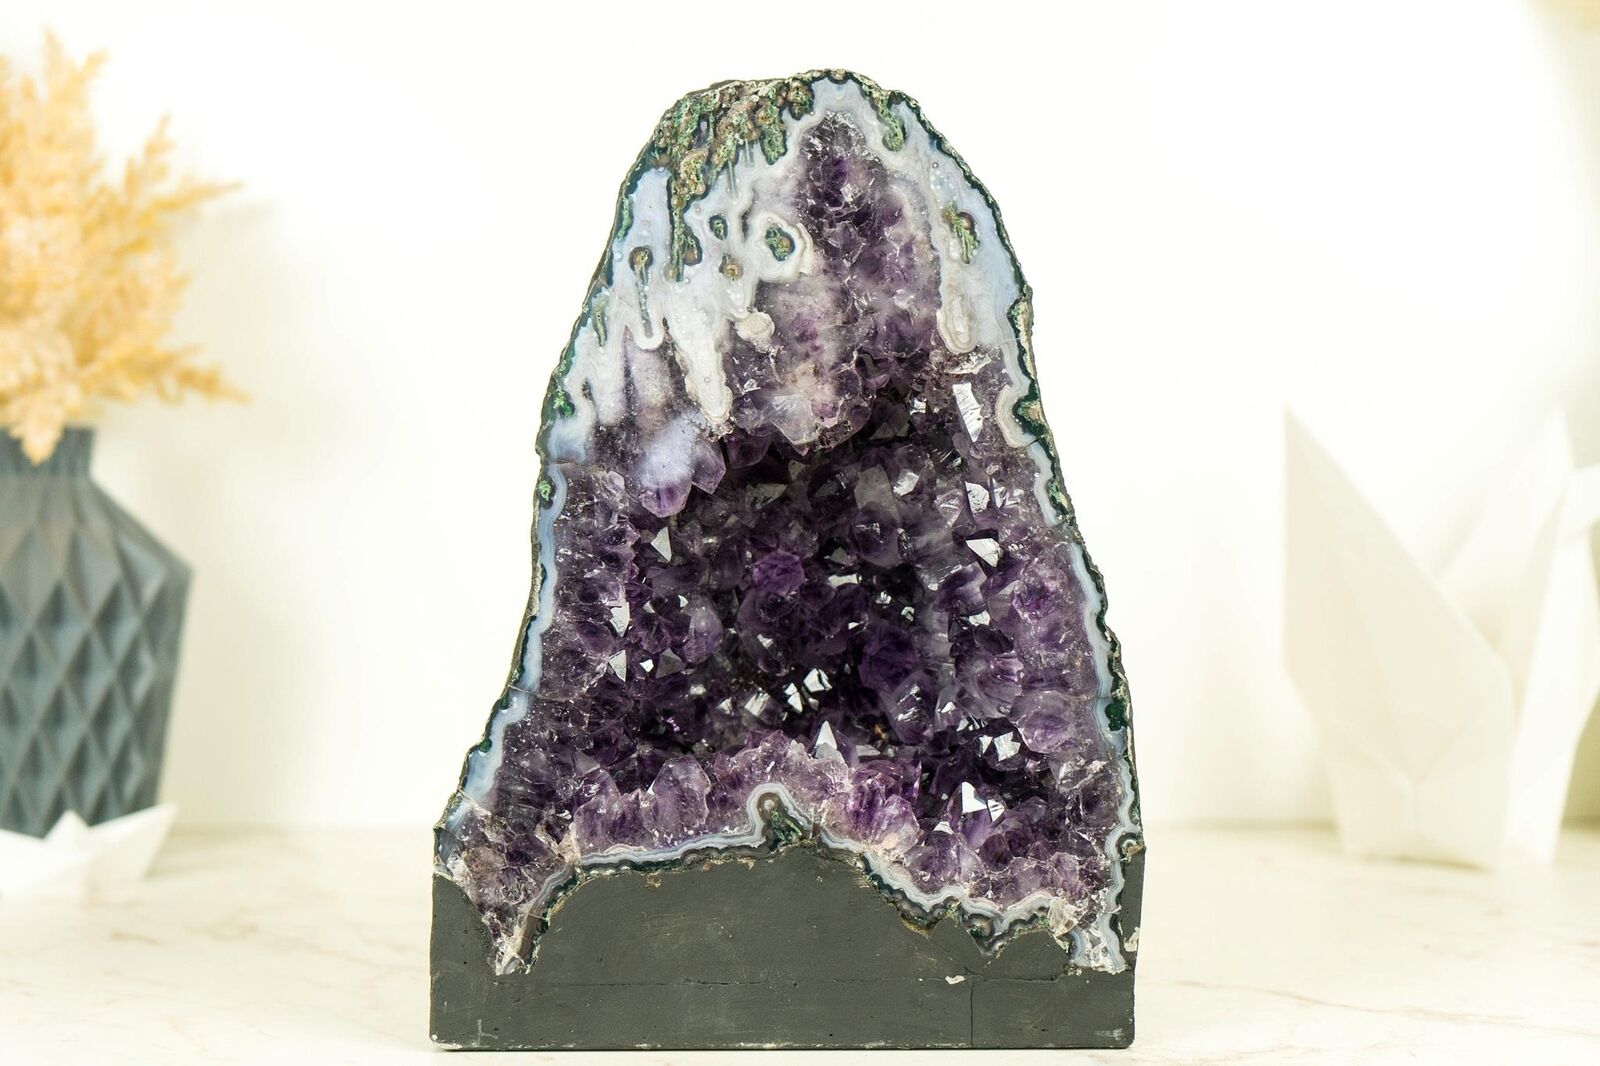 Rare Deep Purple Amethyst Geode with Landscape Agate, 7.9 Kg - 17.4 lb